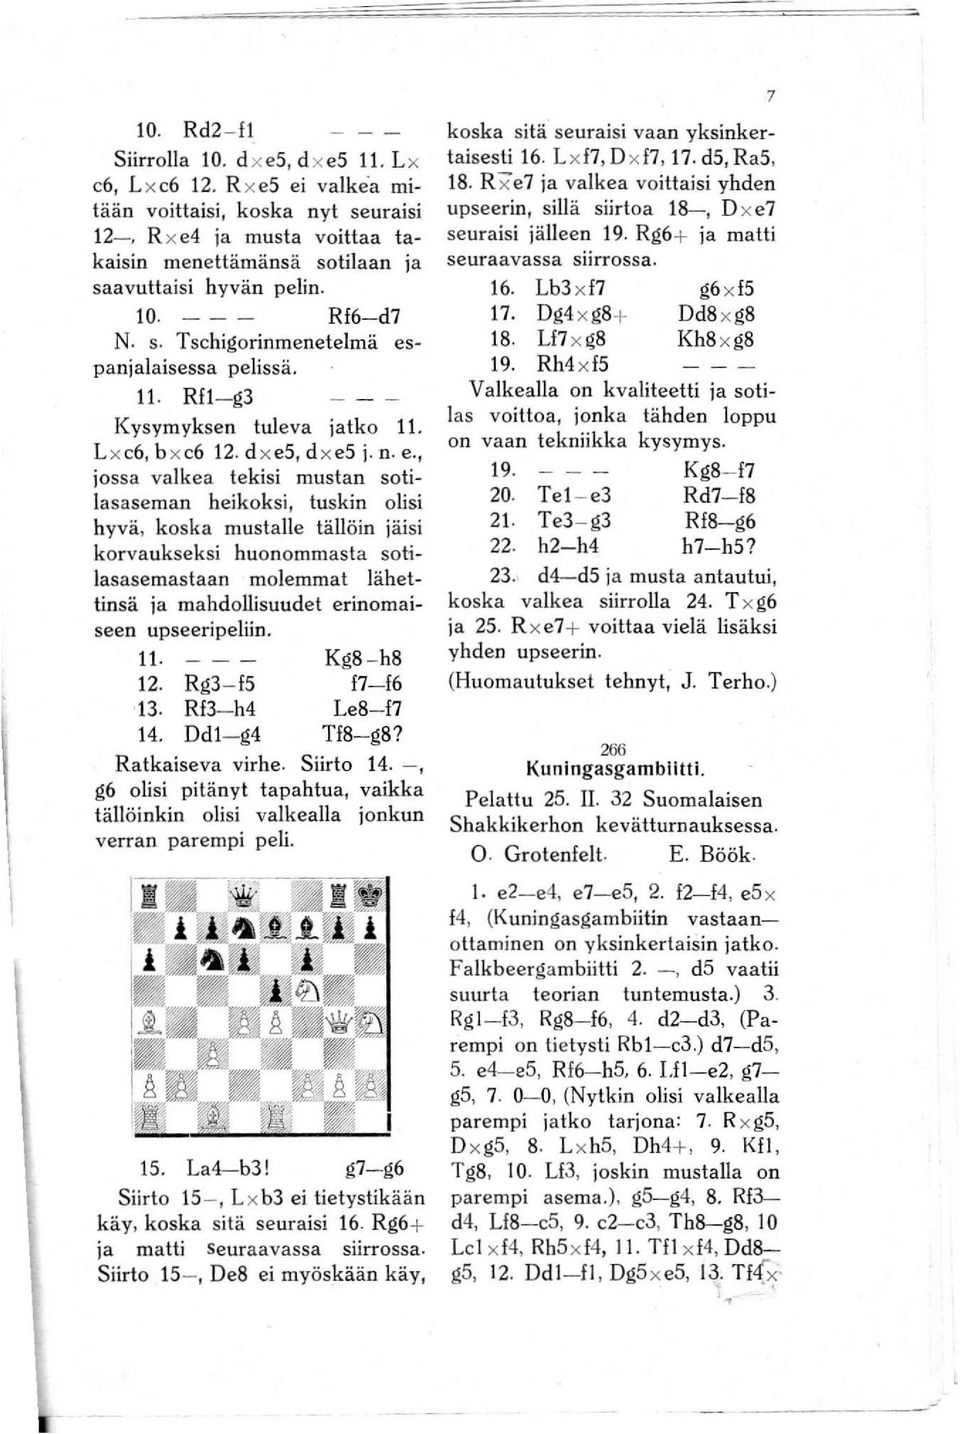 s Tschigorinmenetelmä espanjalaisessa pelissä. 11. Rfl-g3 Kysymyksen tuleva jatko 11. L x c6, b x c6 12. d x e5, d x e5 j. n e.